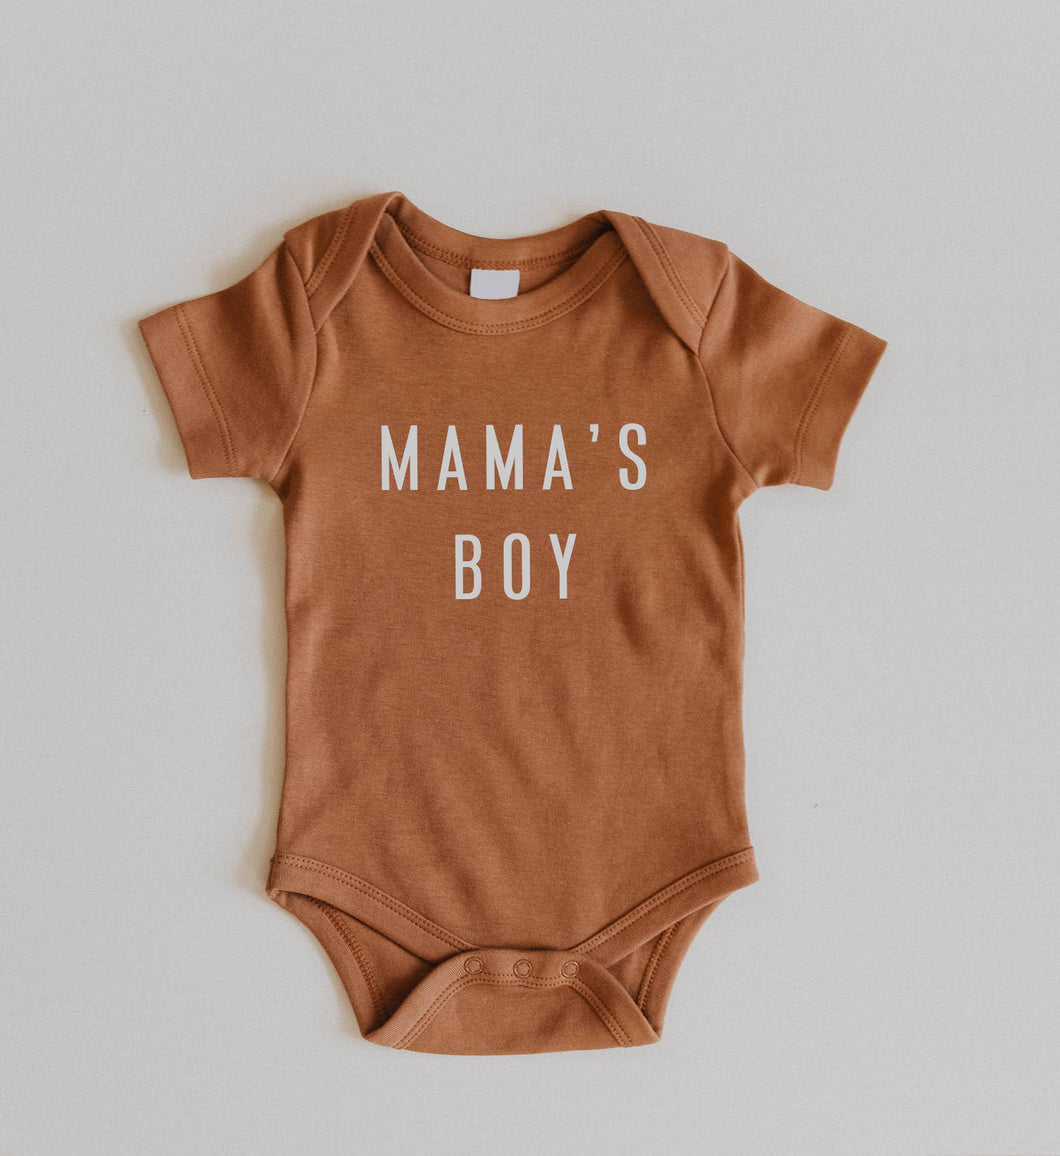 Mama's Boy - Modern - Camel Onesie, Baby Bodysuit